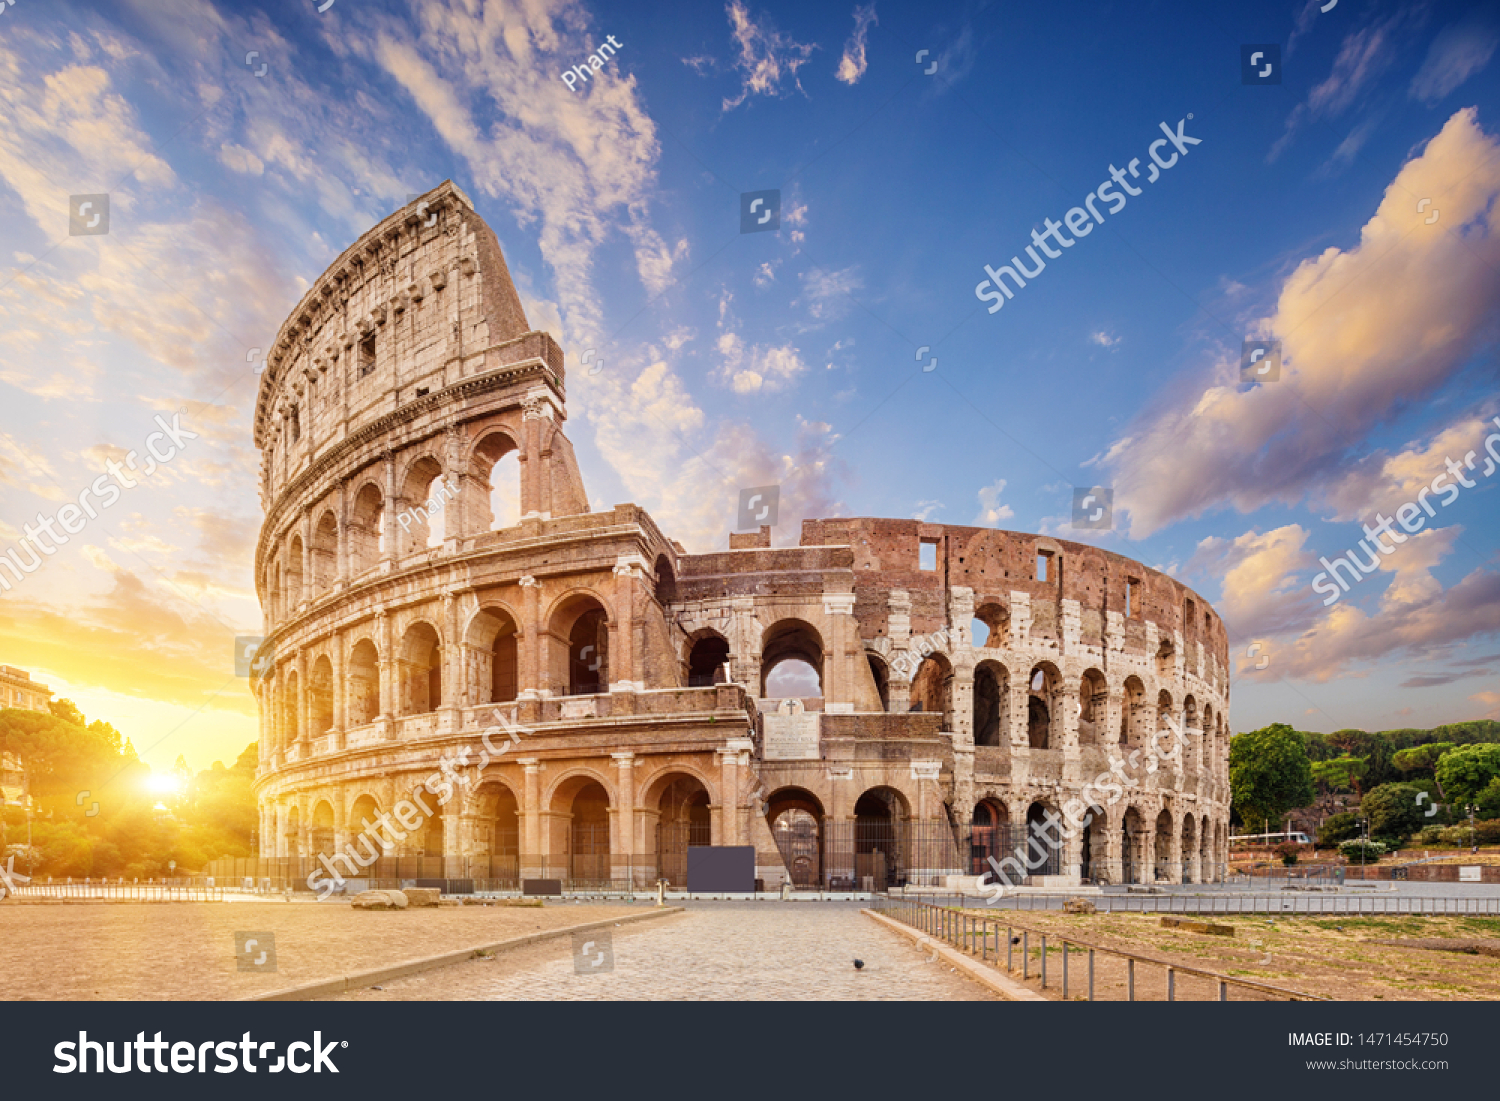 Coliseum or Flavian Amphitheatre (Amphitheatrum Flavium or Colosseo), Rome, Italy.   #1471454750